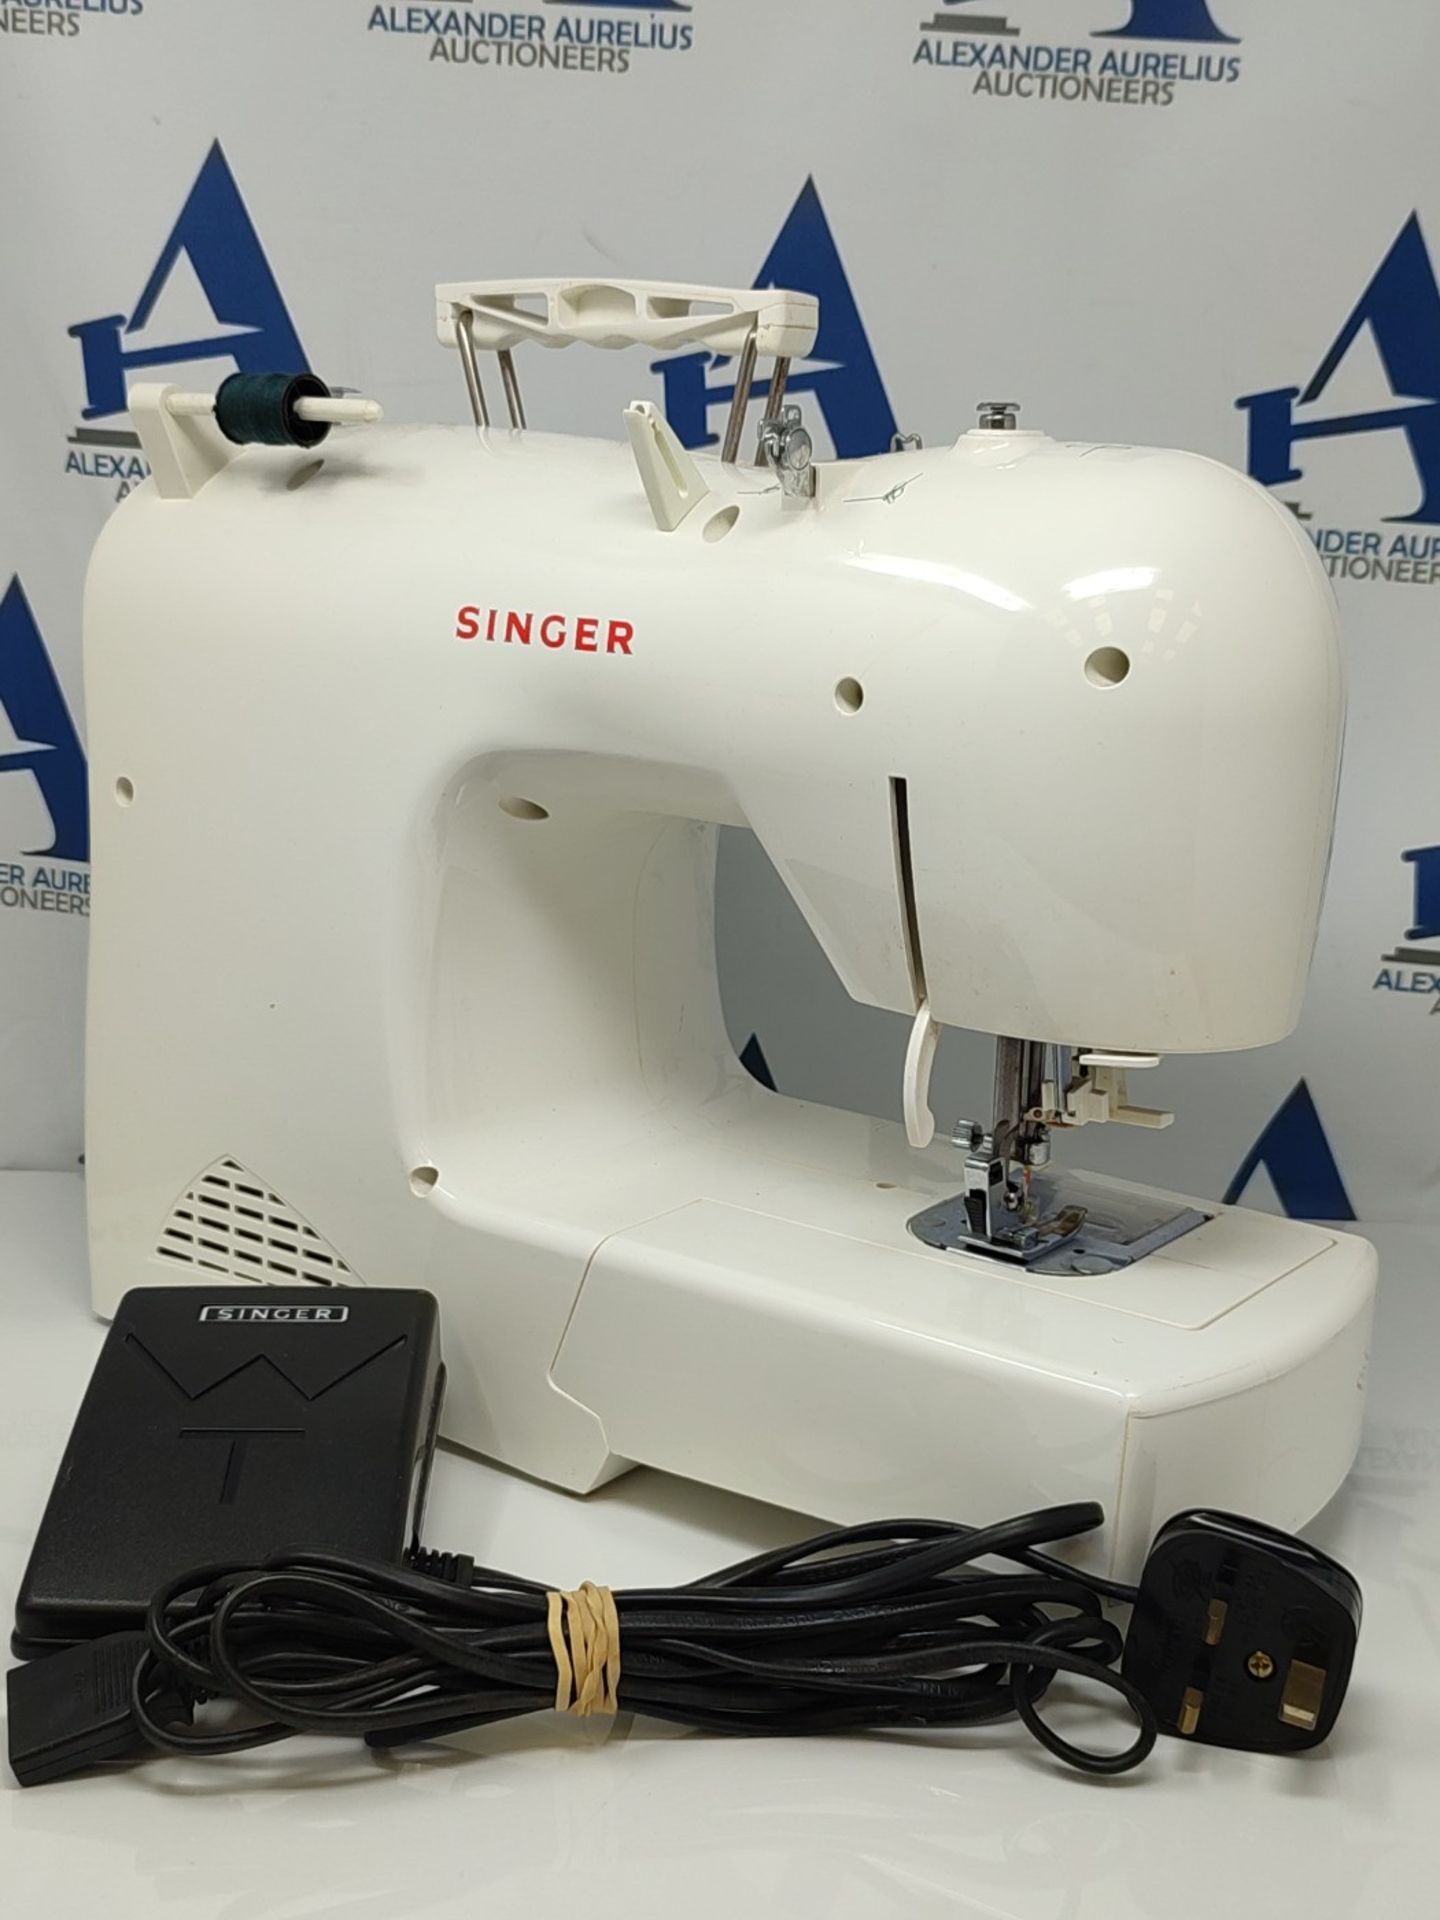 Singer Inspiration 4212 Sewing Machine - Image 2 of 2